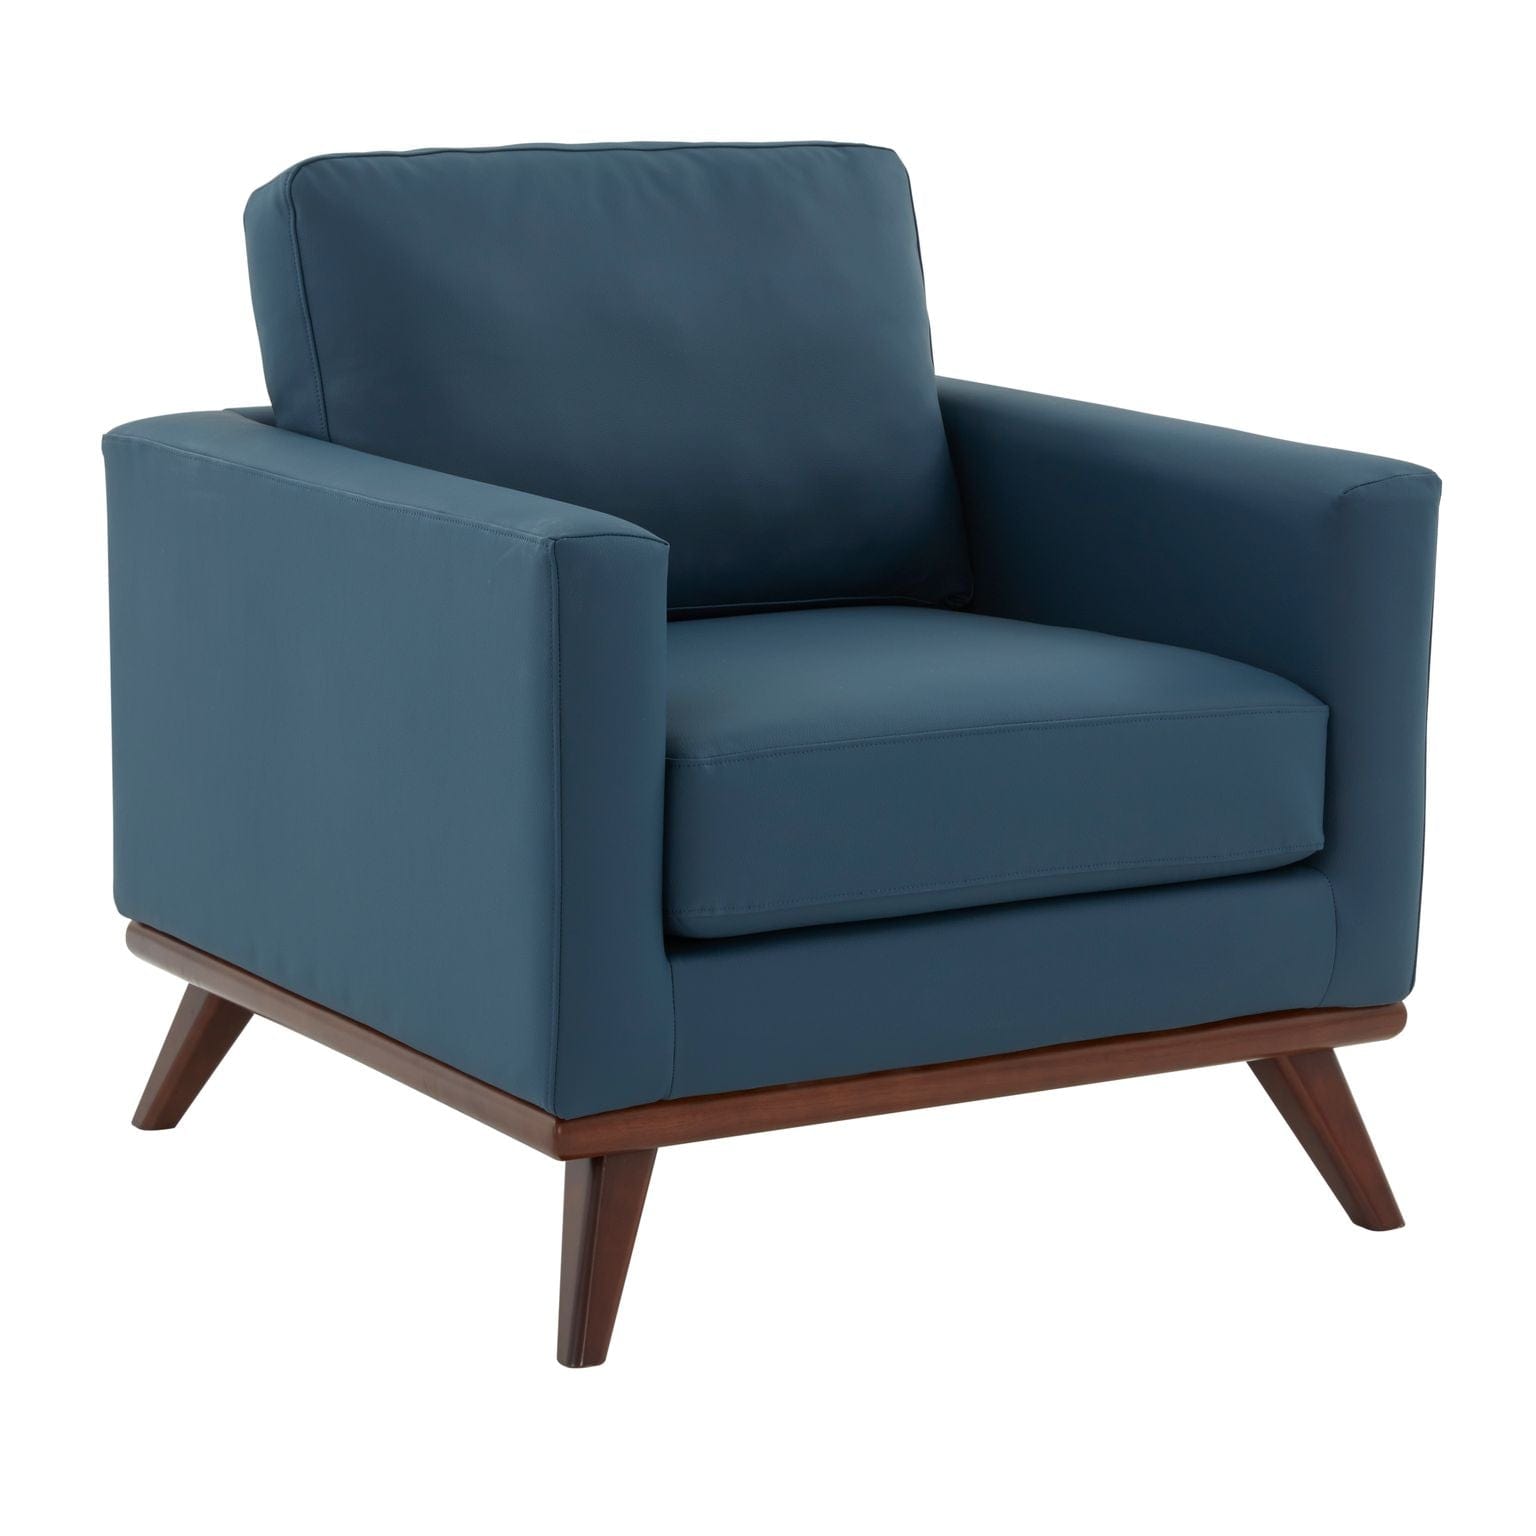 LeisureMod Chester Modern Leather Armchair - Navy Blue